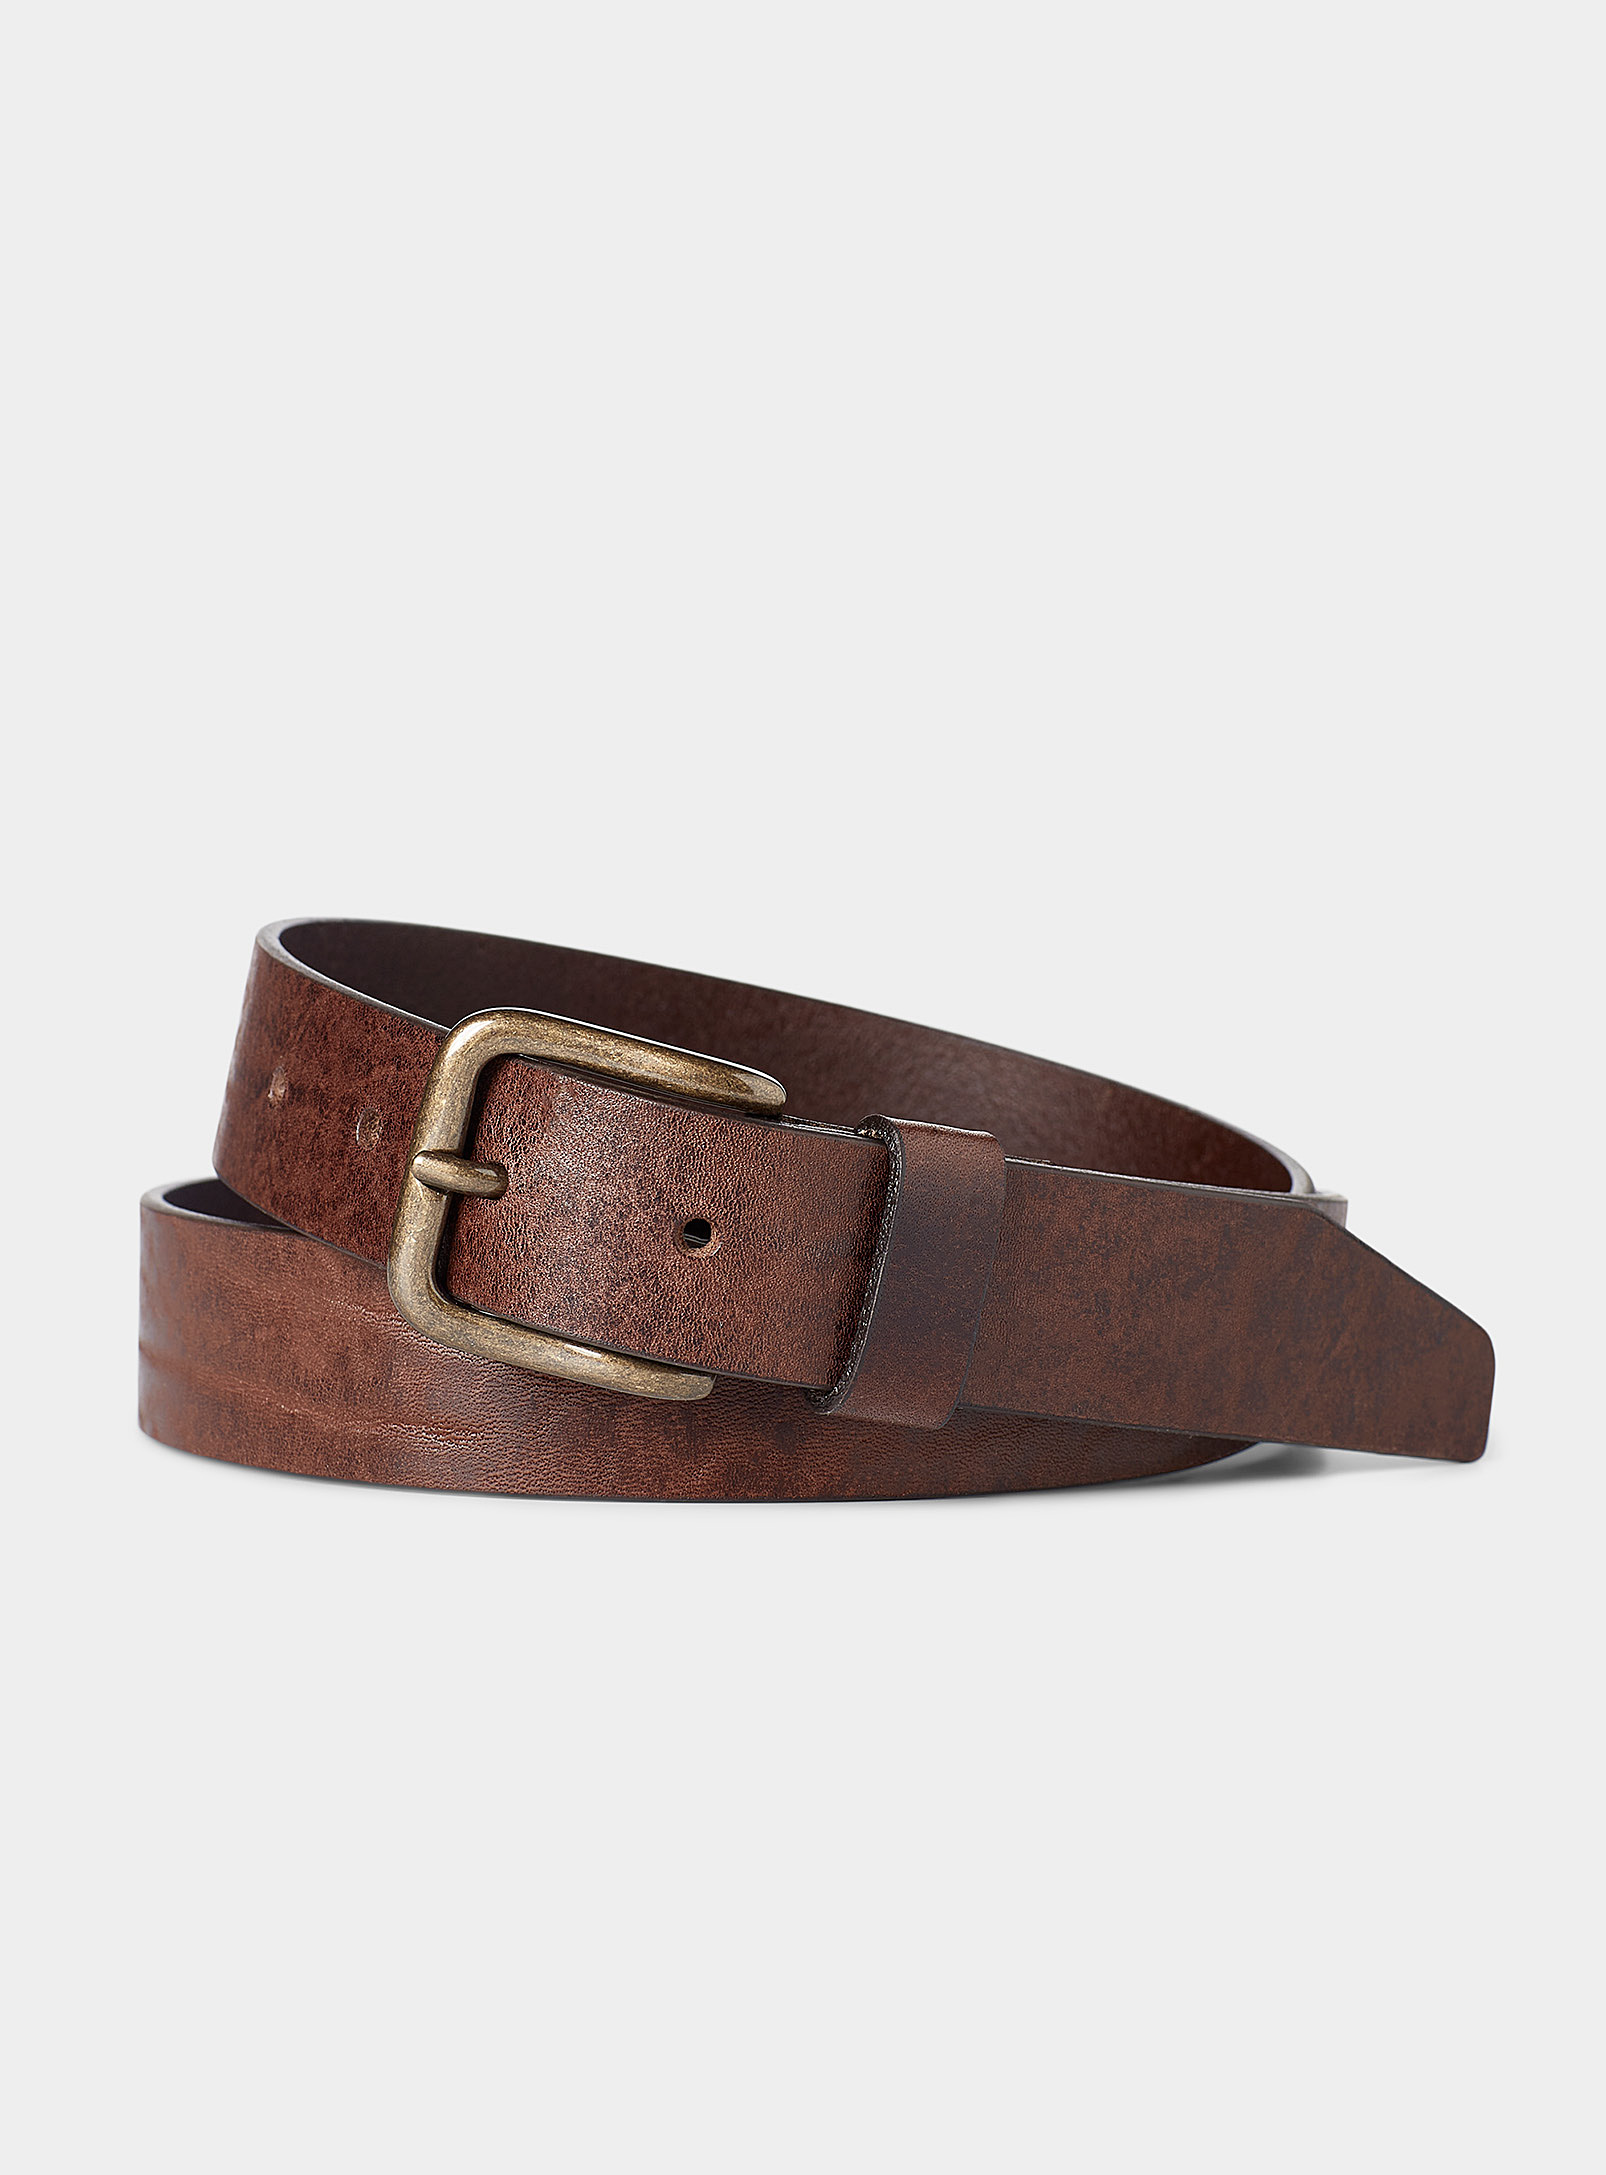 Jack & Jones Vintage-like Buckle Genuine Leather Belt In Chocolate/espresso